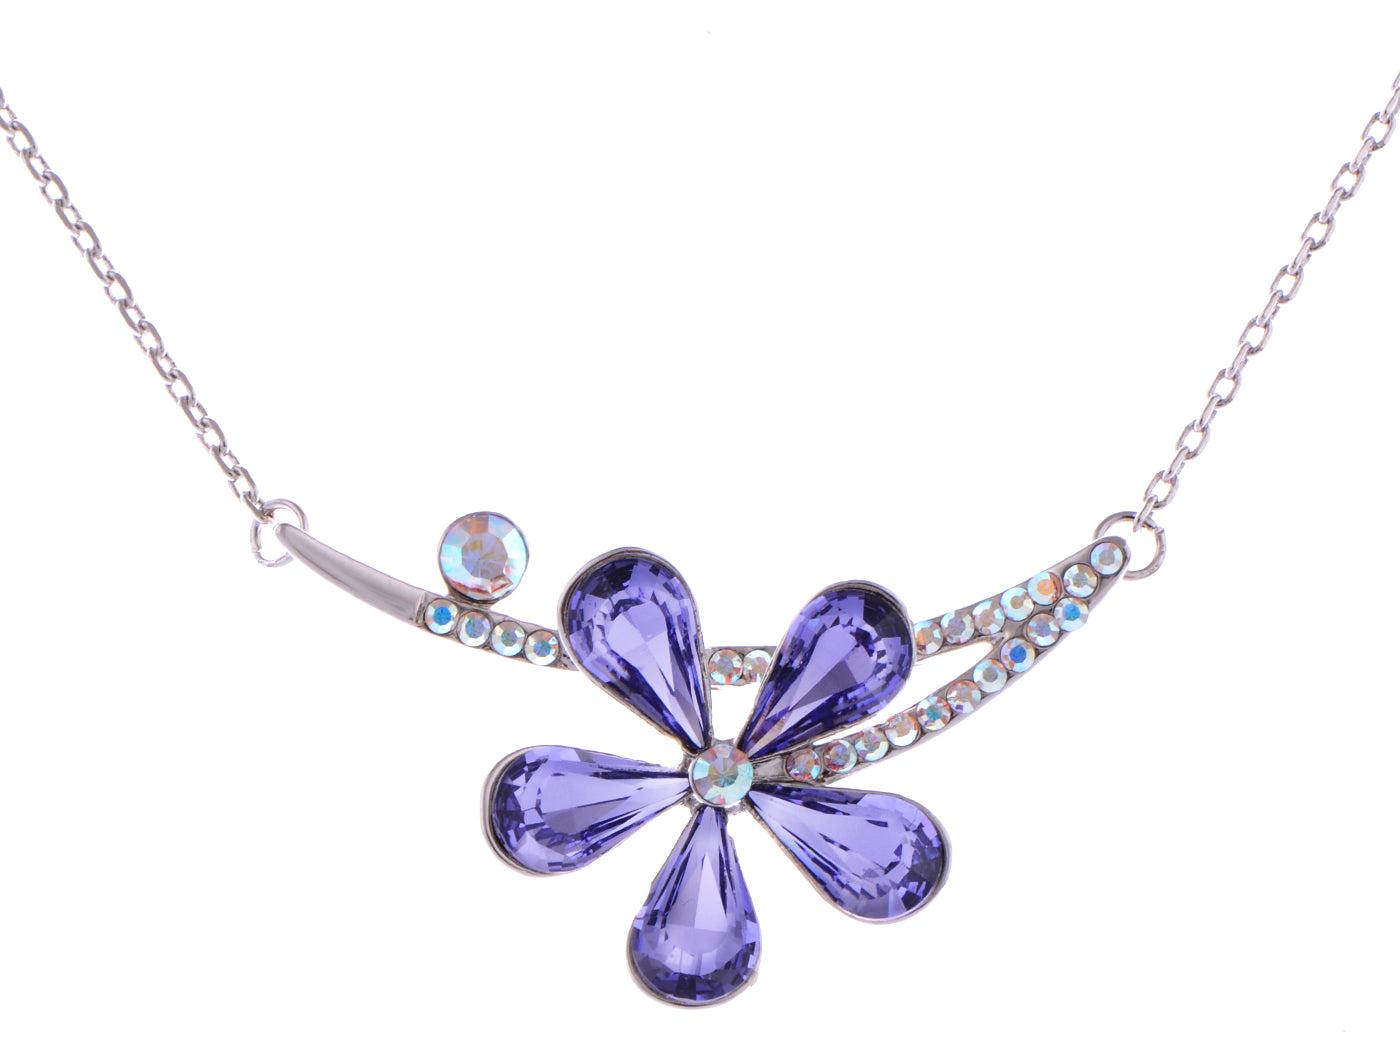 Swarovski Crystal Amethyst Colored Floral Flower Pendant Necklace